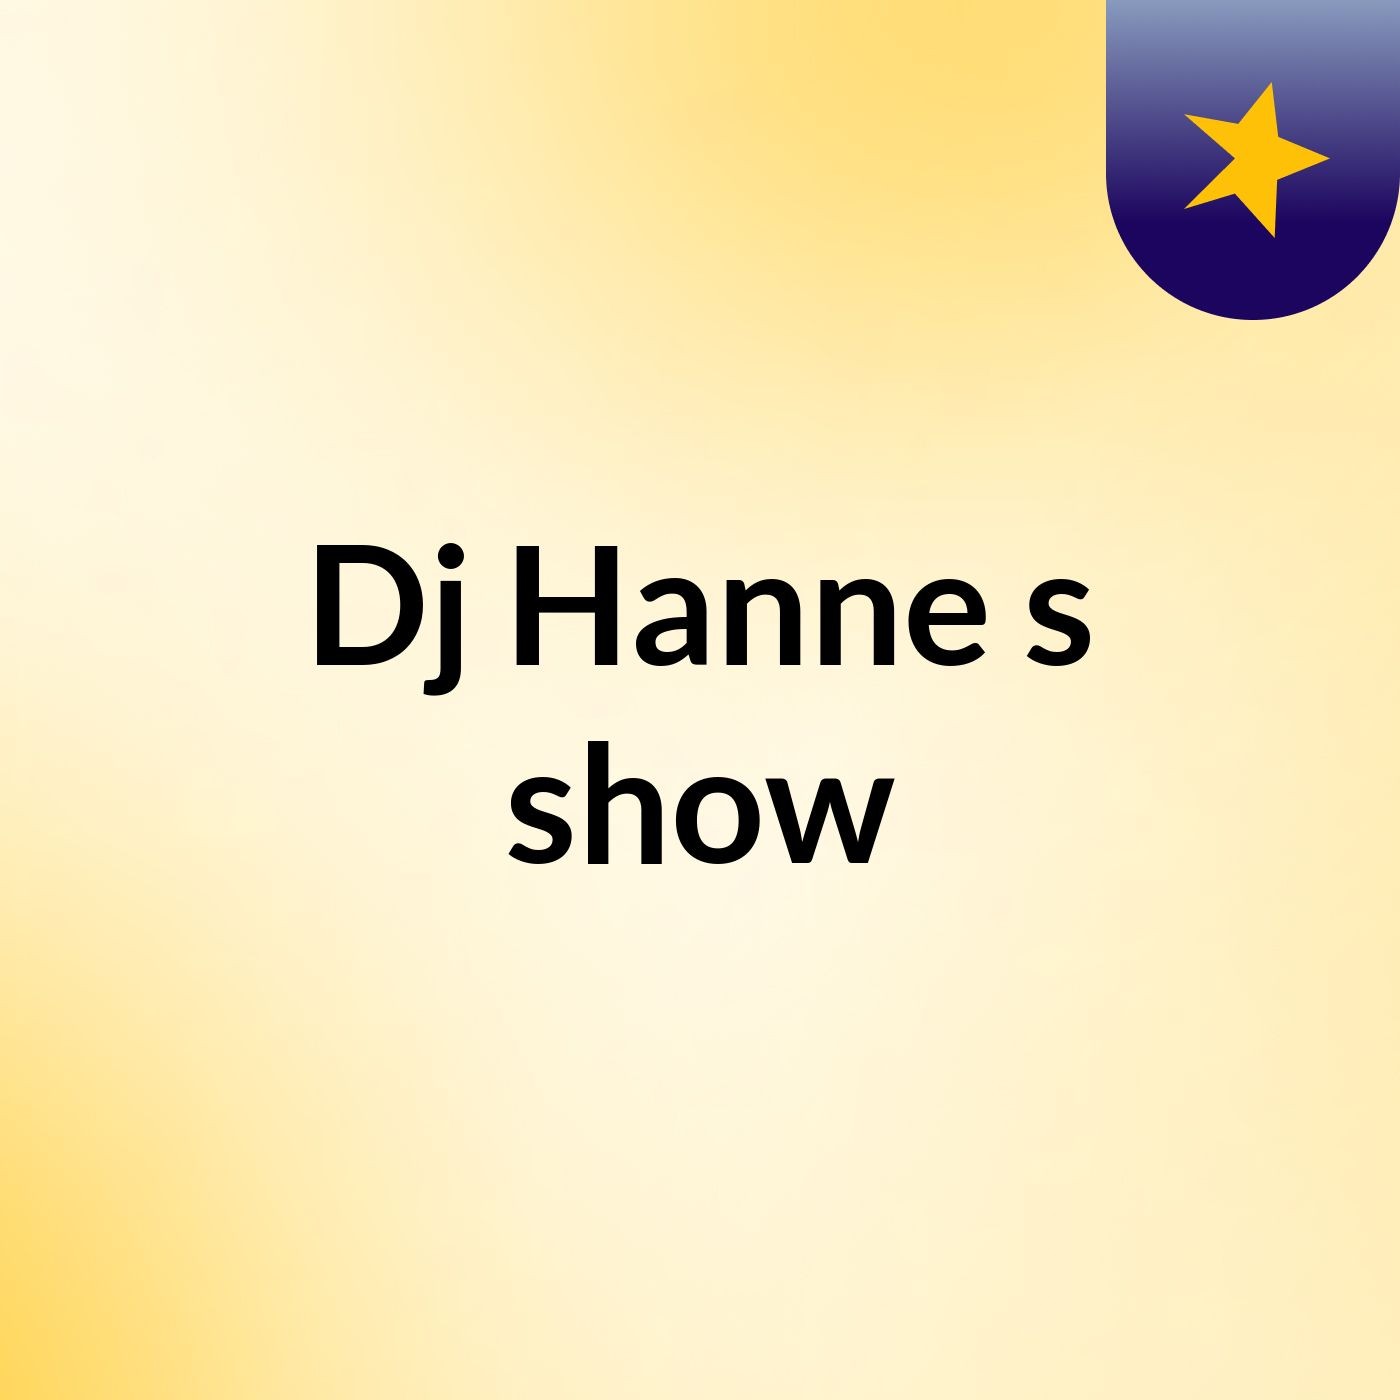 Dj Hanne's show